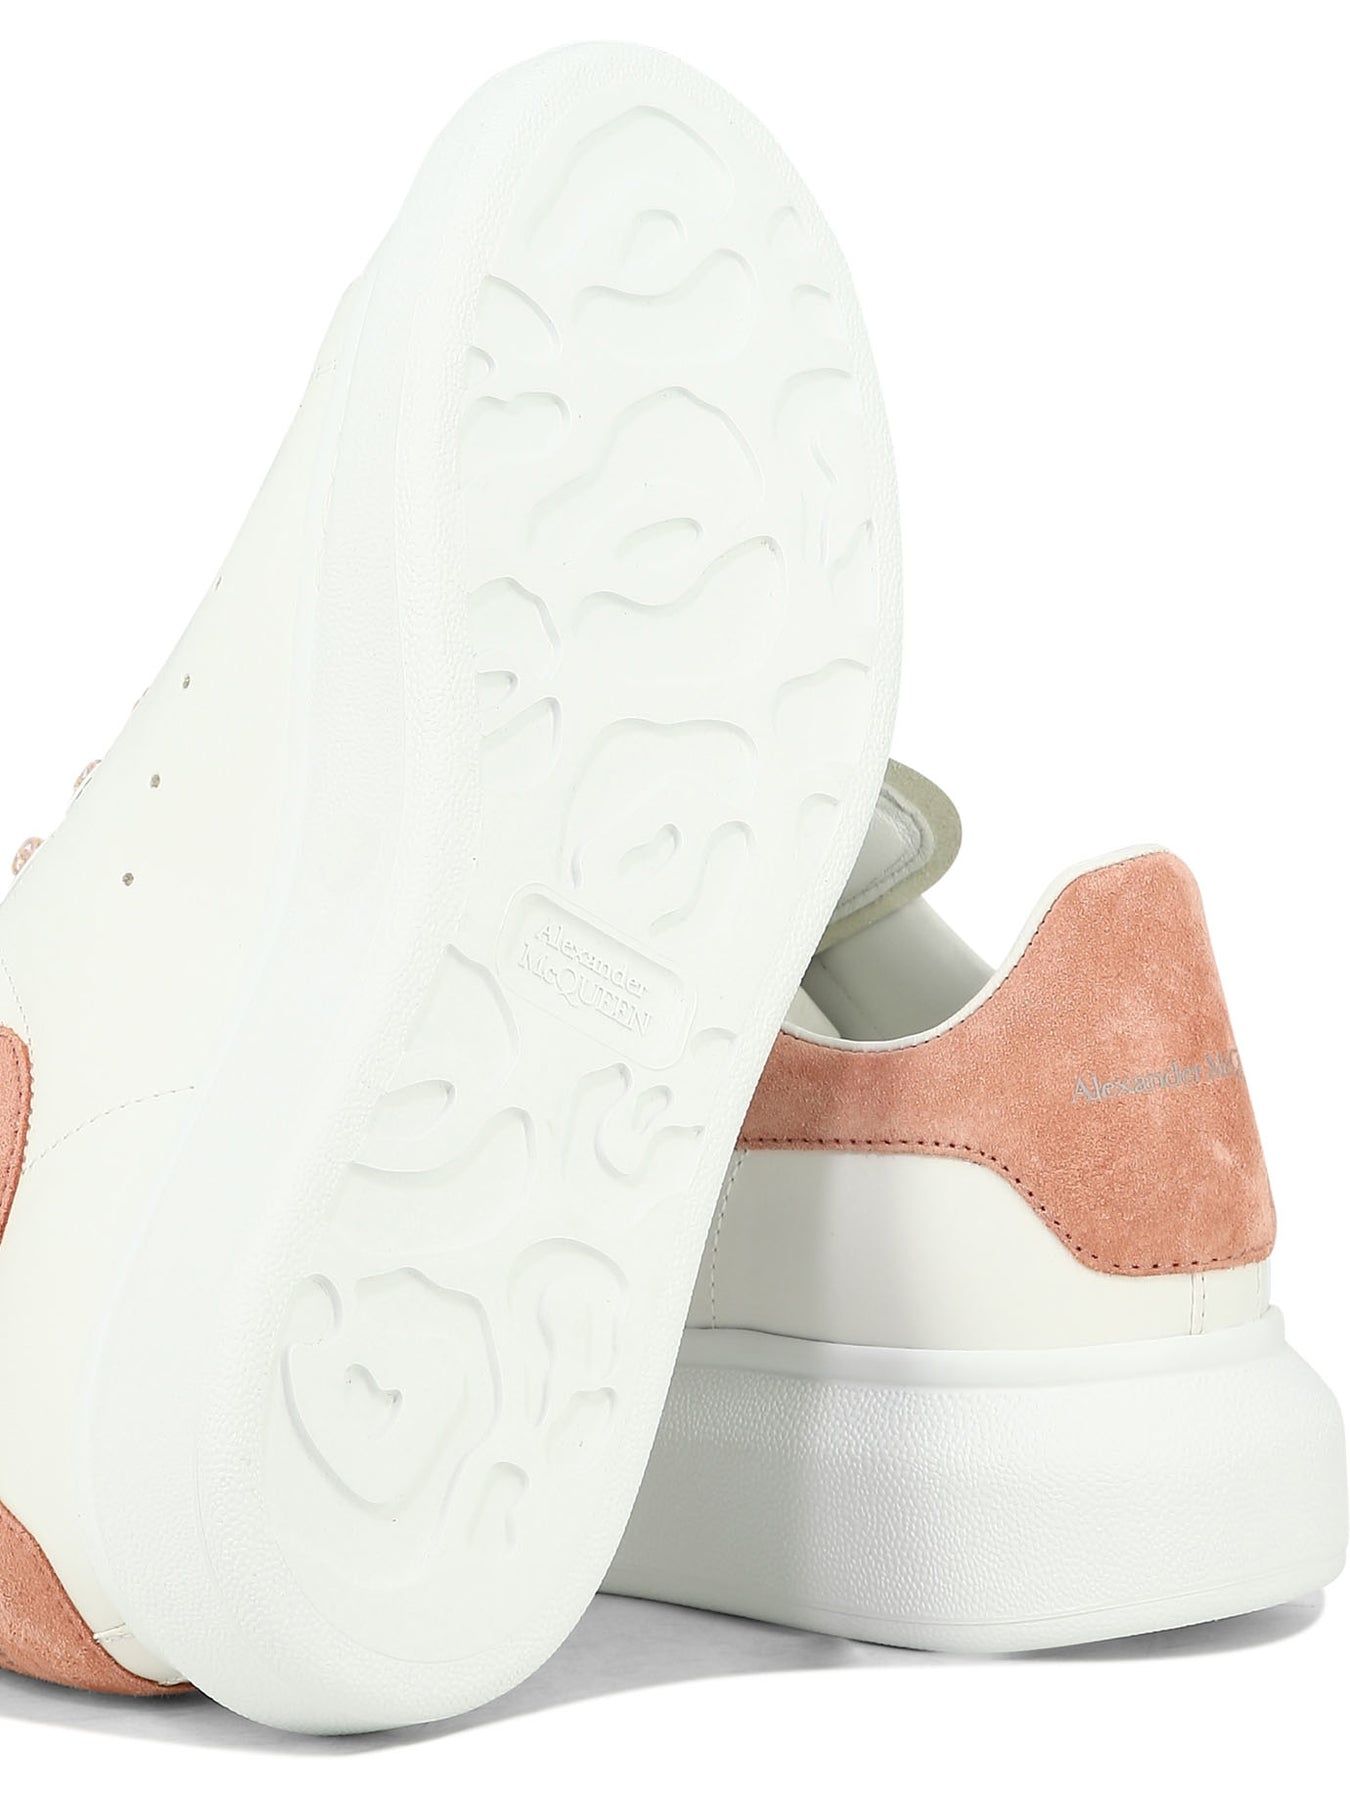 New Tech Sneakers & Slip-On White - 5